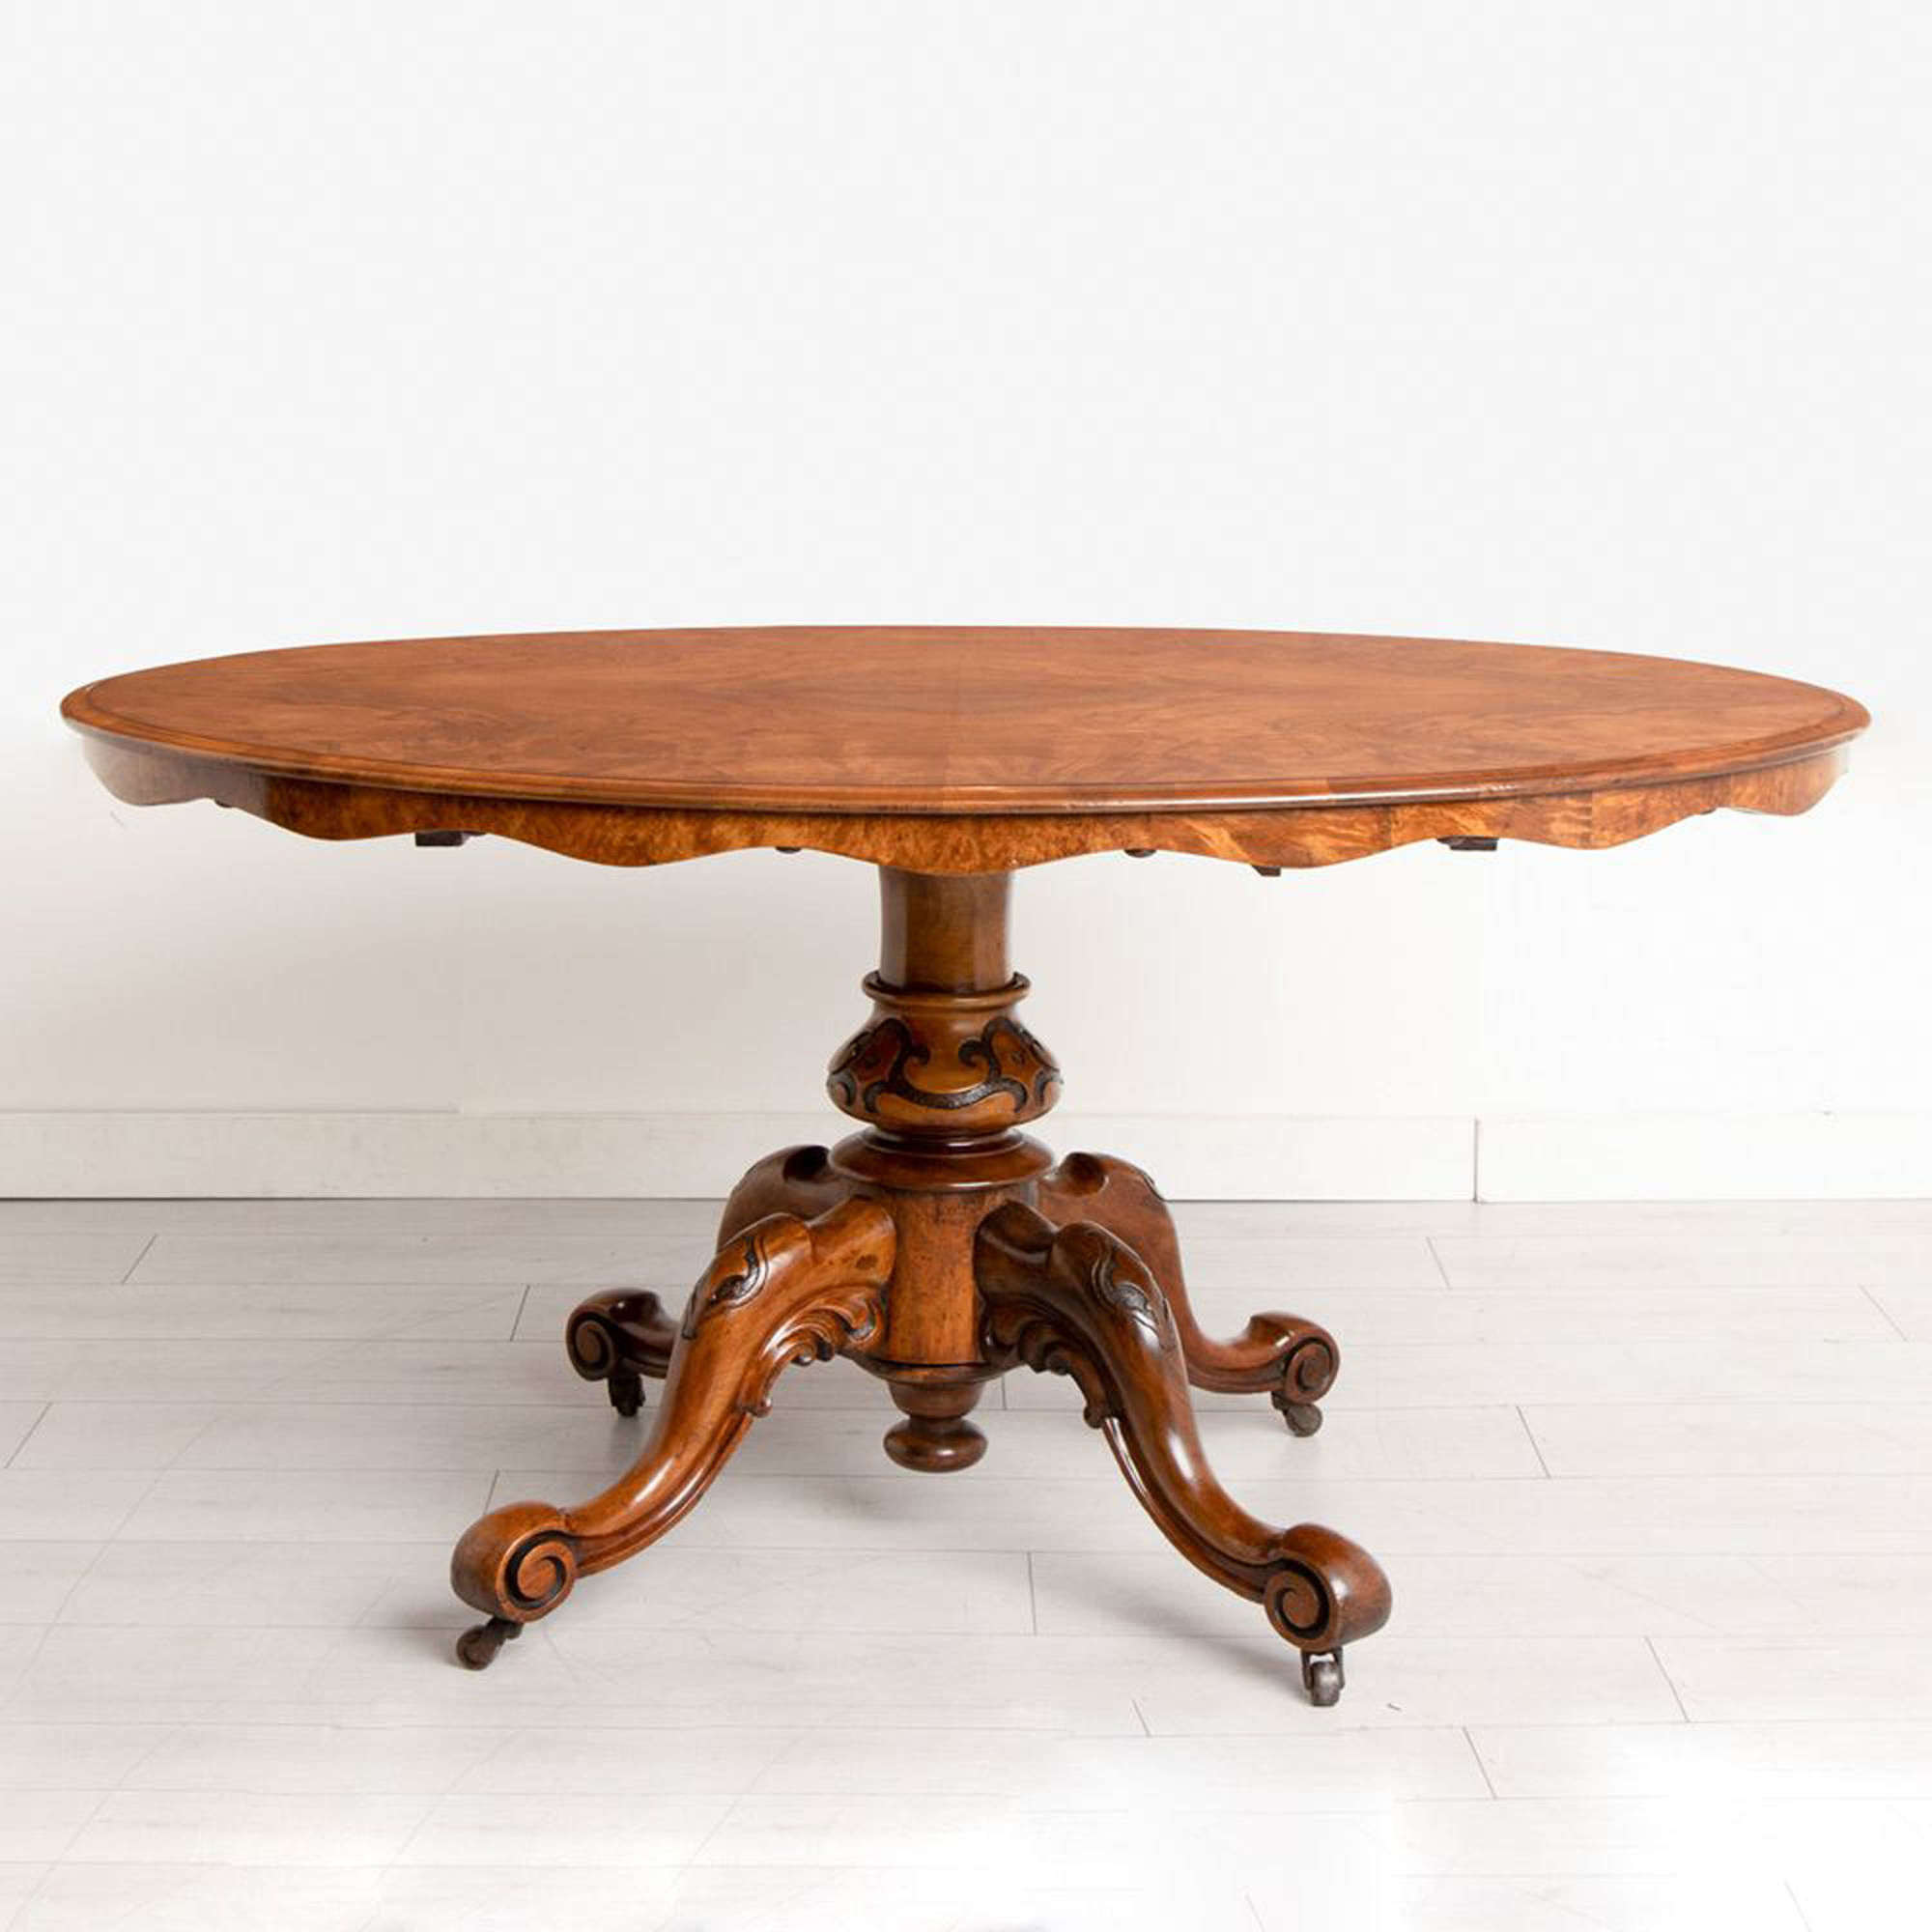 Antique Figured Walnut Veneer Oval Top Breakfast Table c.1860